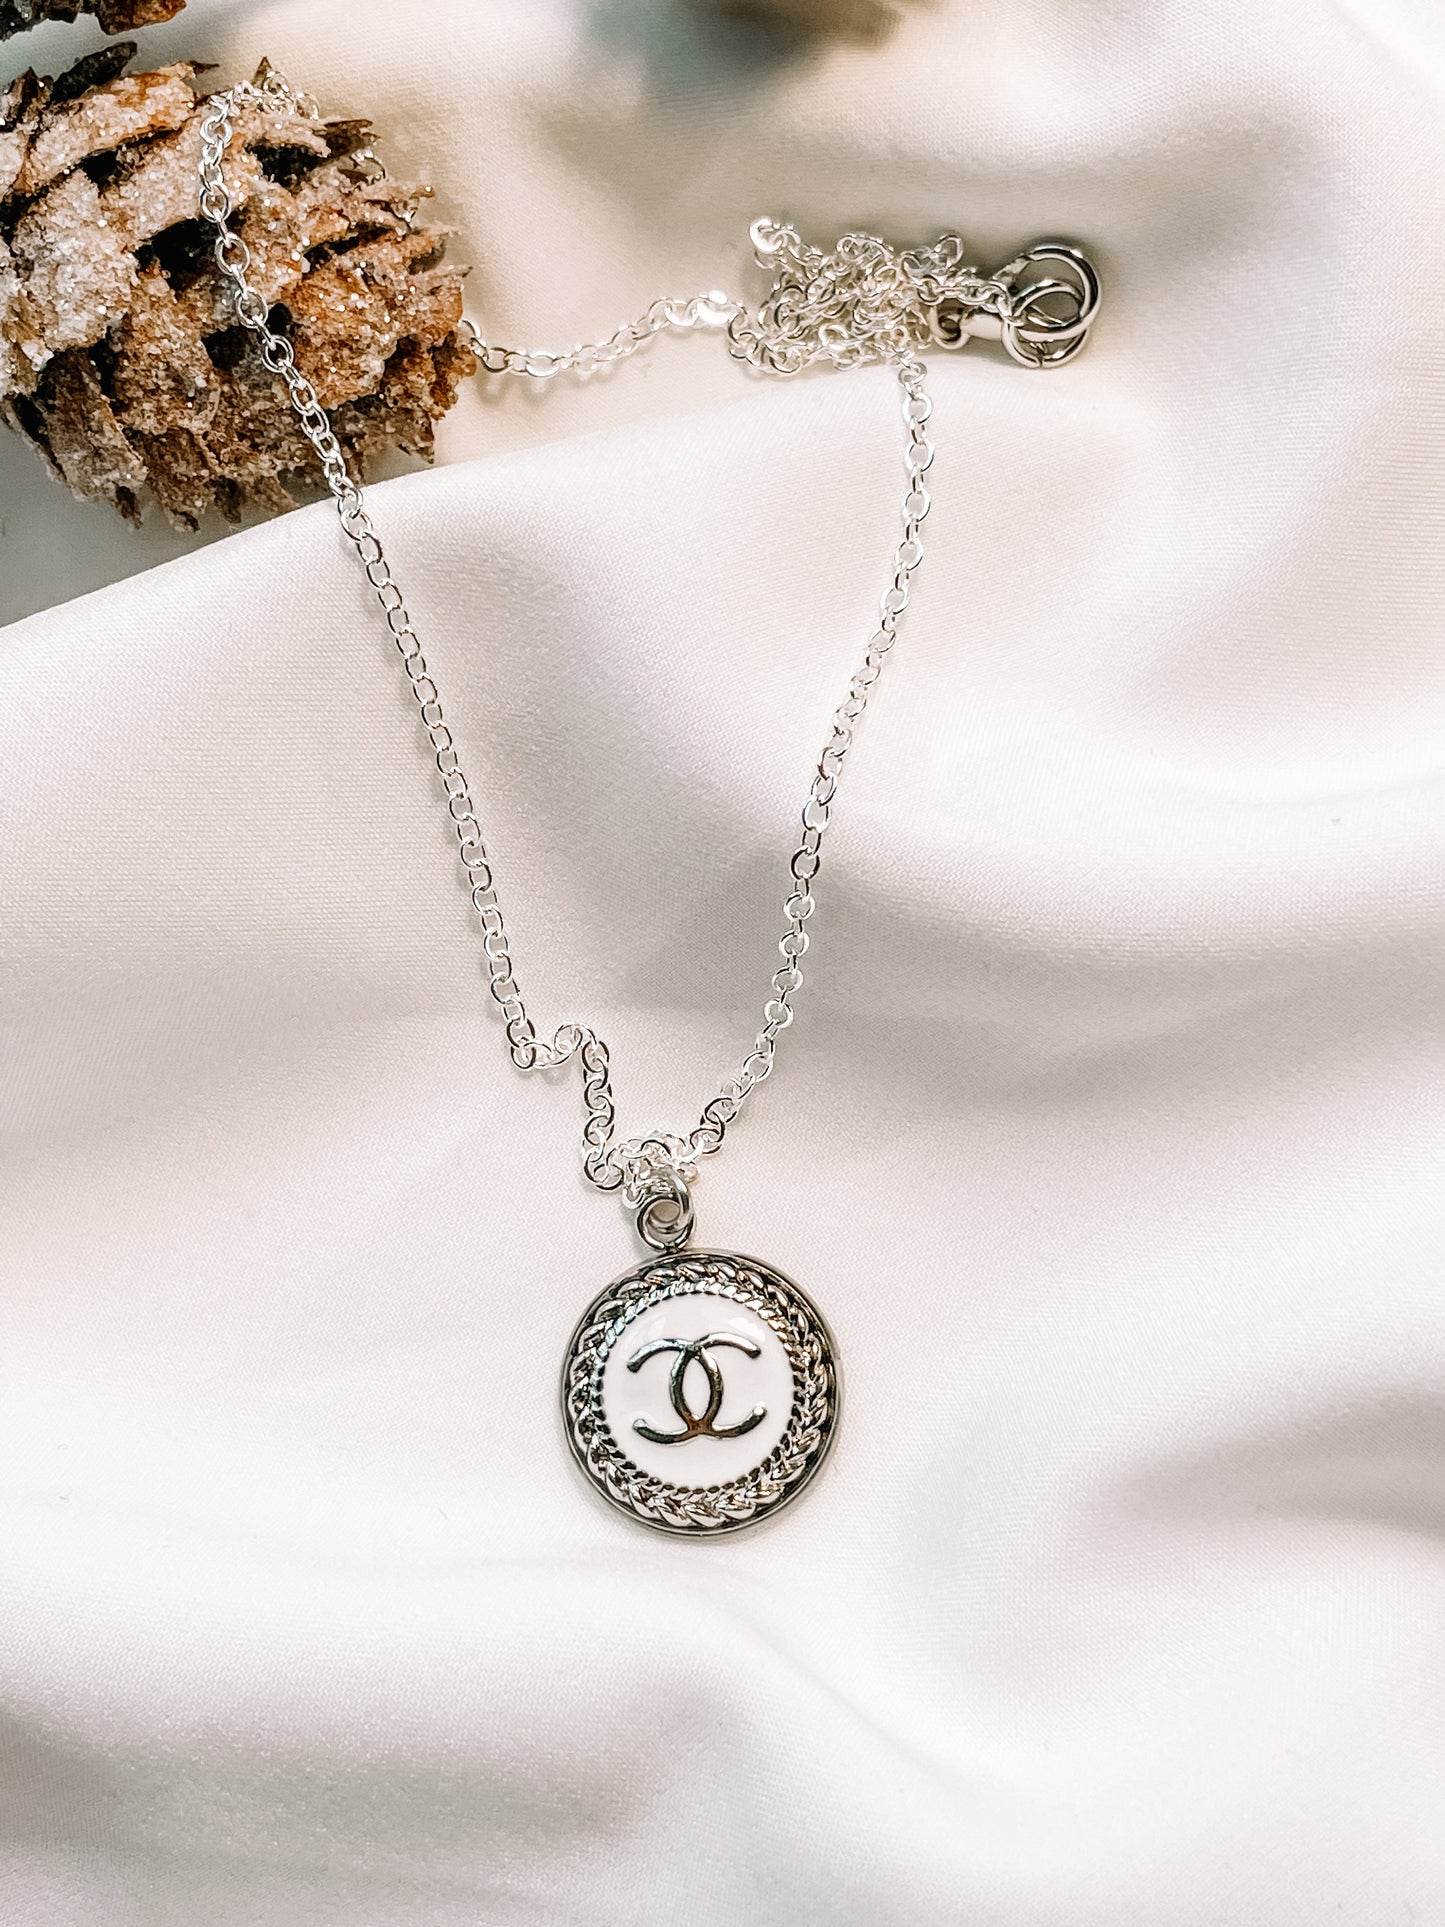 Repurposed Chanel Pendant necklace